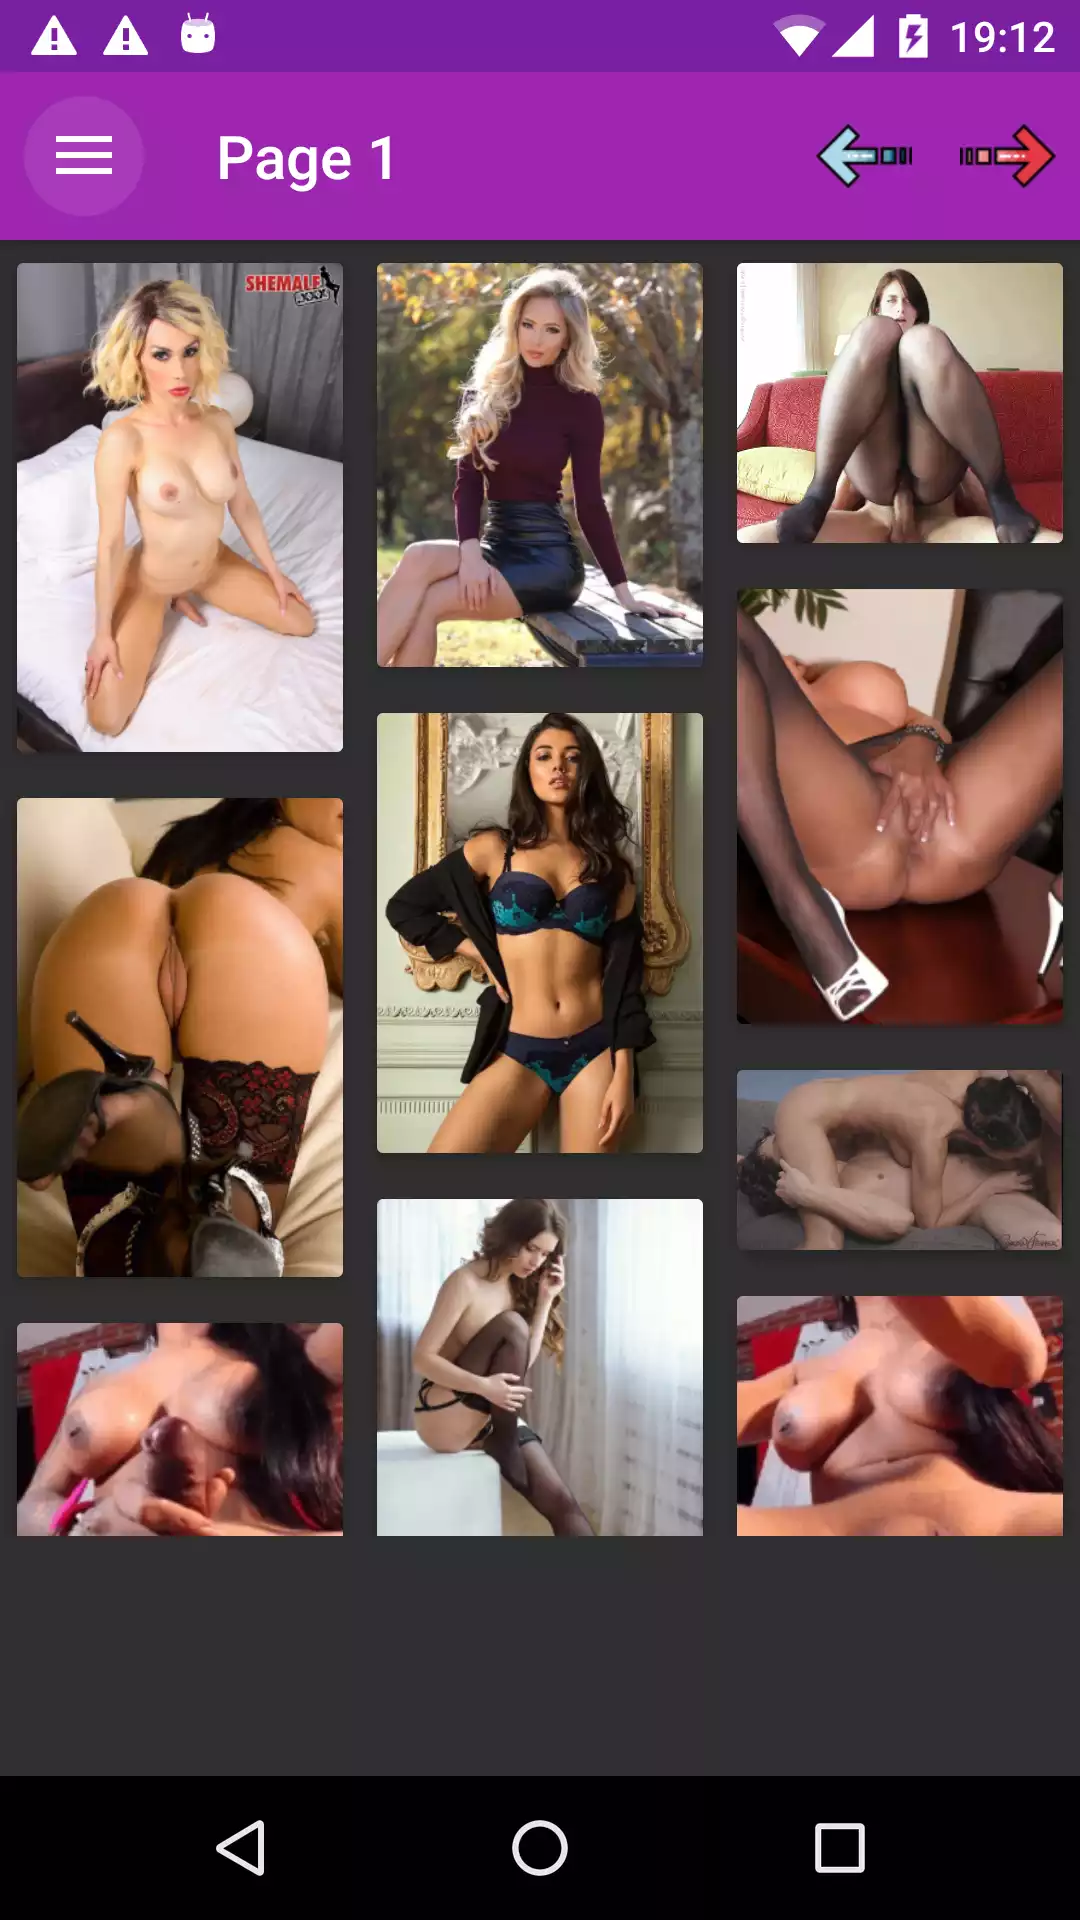 Sexy Group Sex Pics appa,gallery,viewer,pornstar,hebtai,apps,futanari,henti,android,galleries,photos,pictures,henati,sexy,download,porn,app,hentai,pics